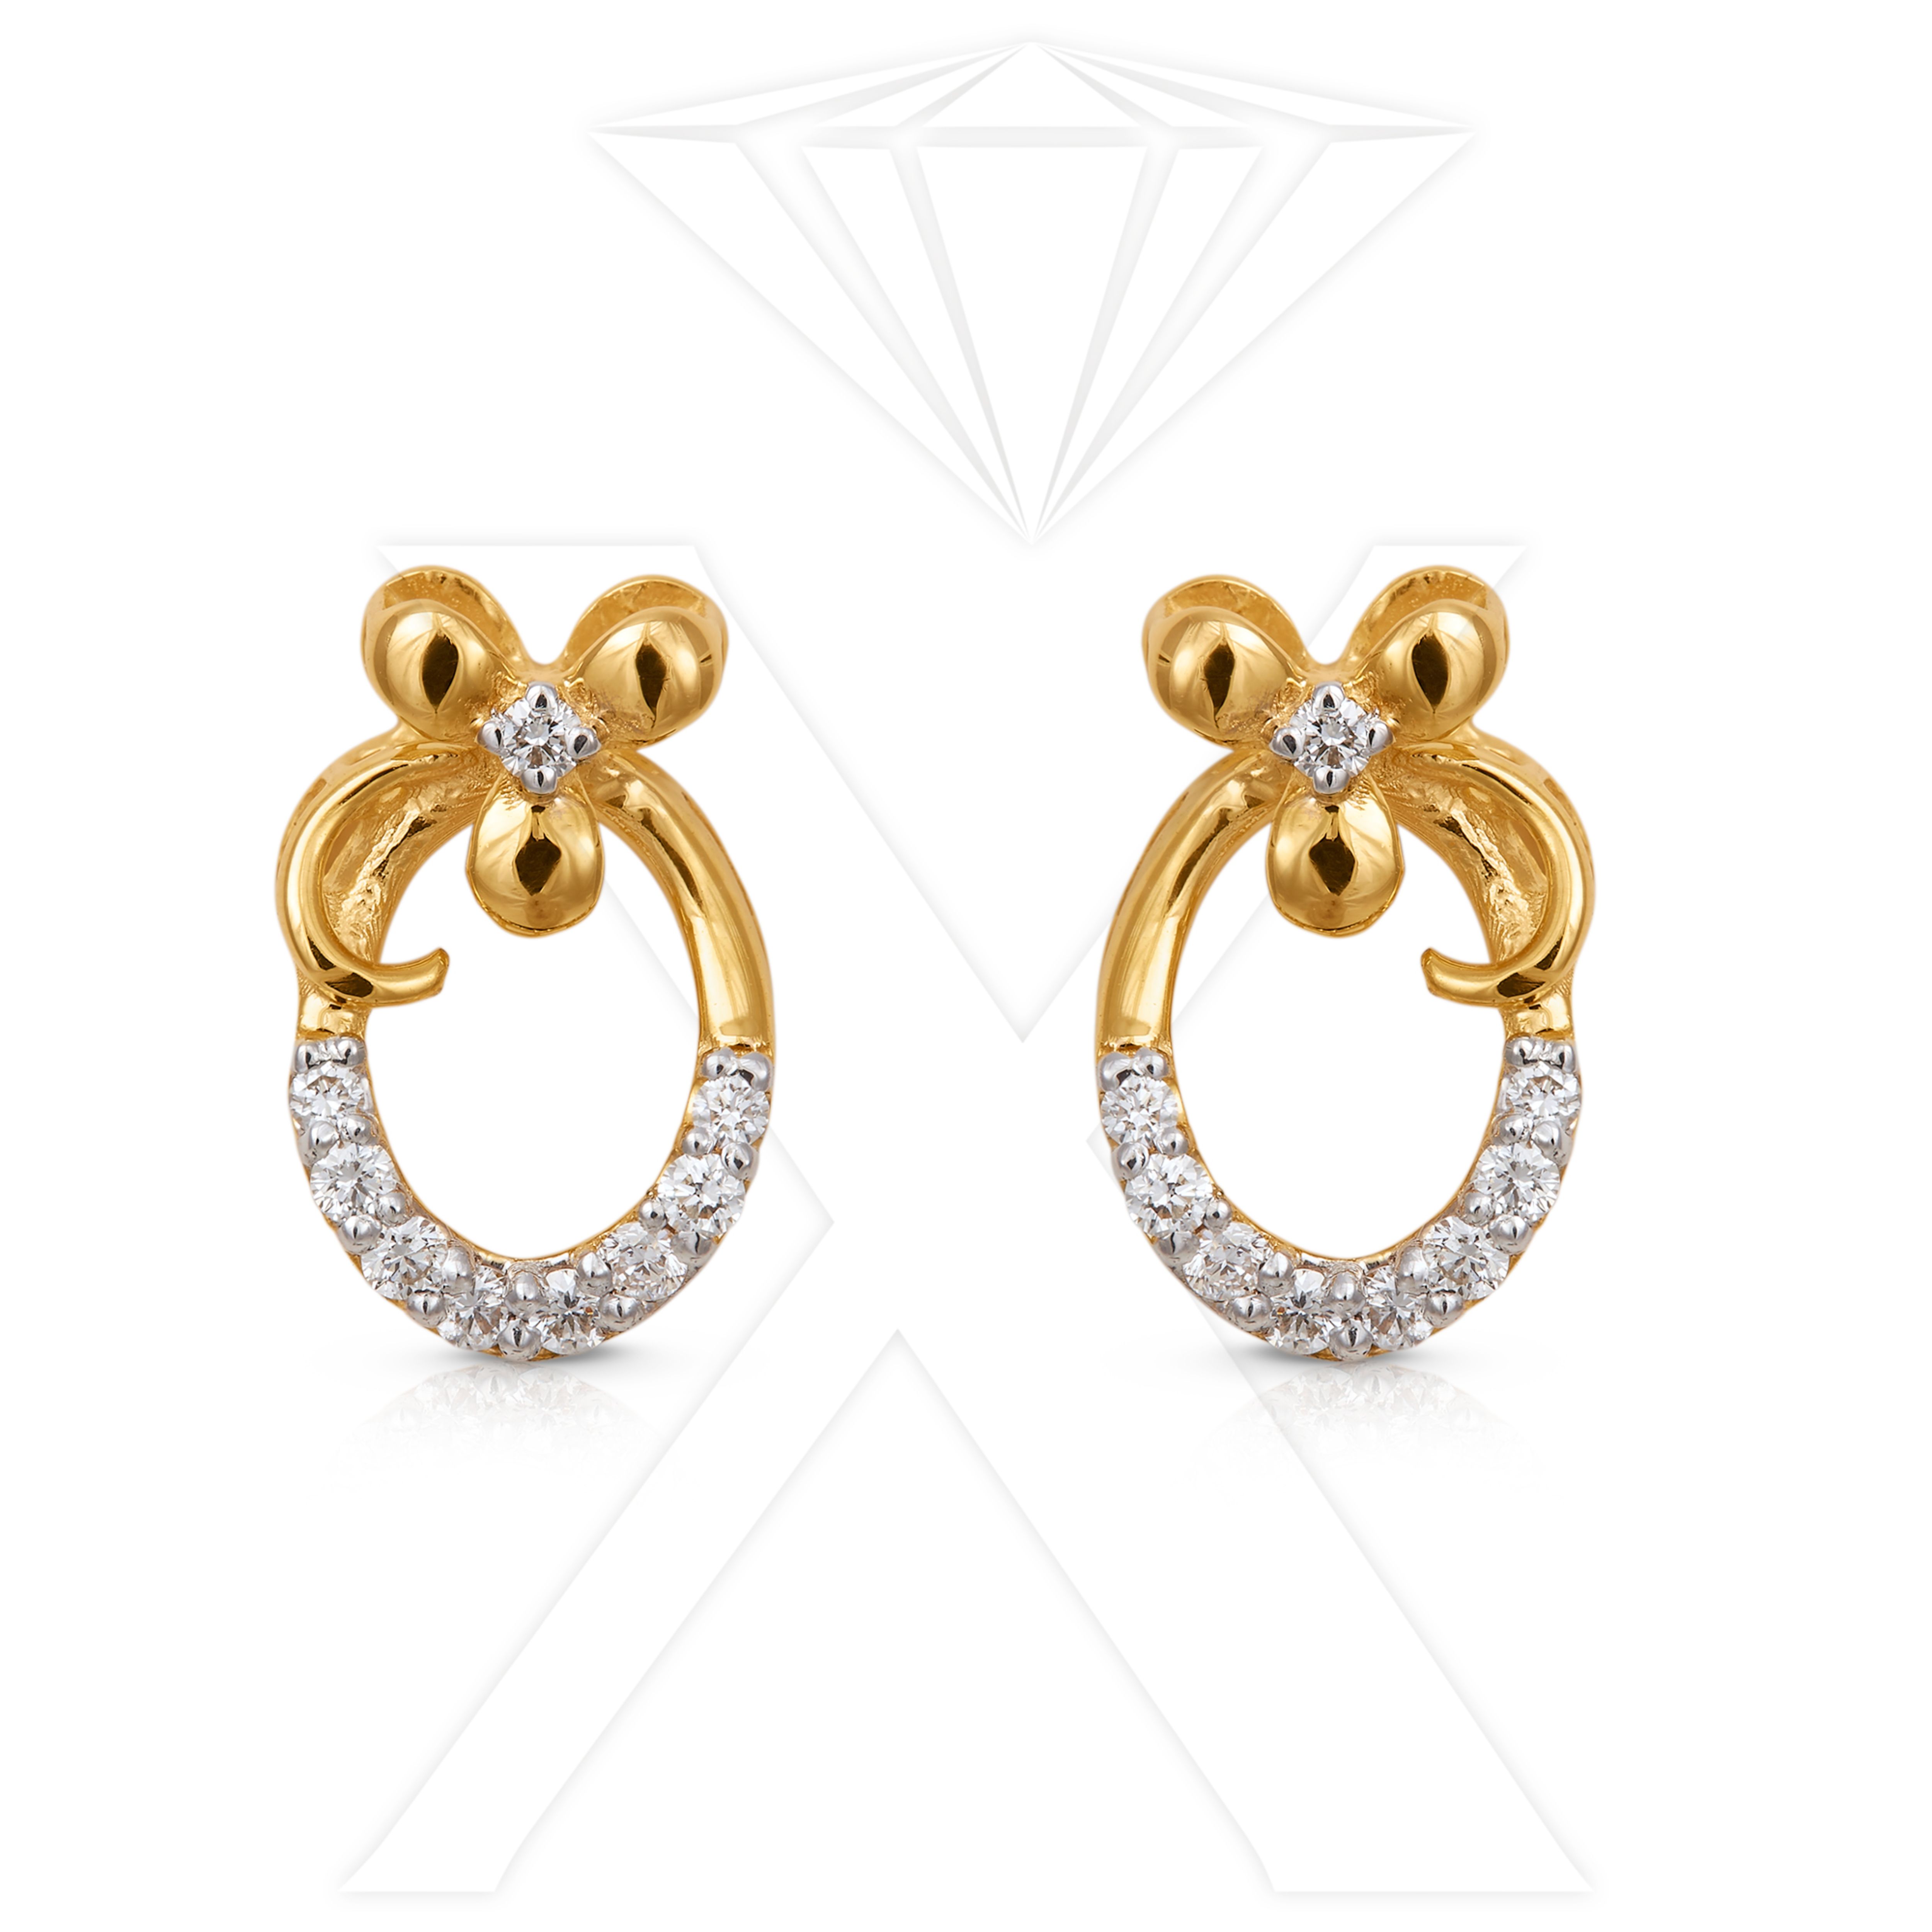 22kt Gold Jewellery Exporters to UAE